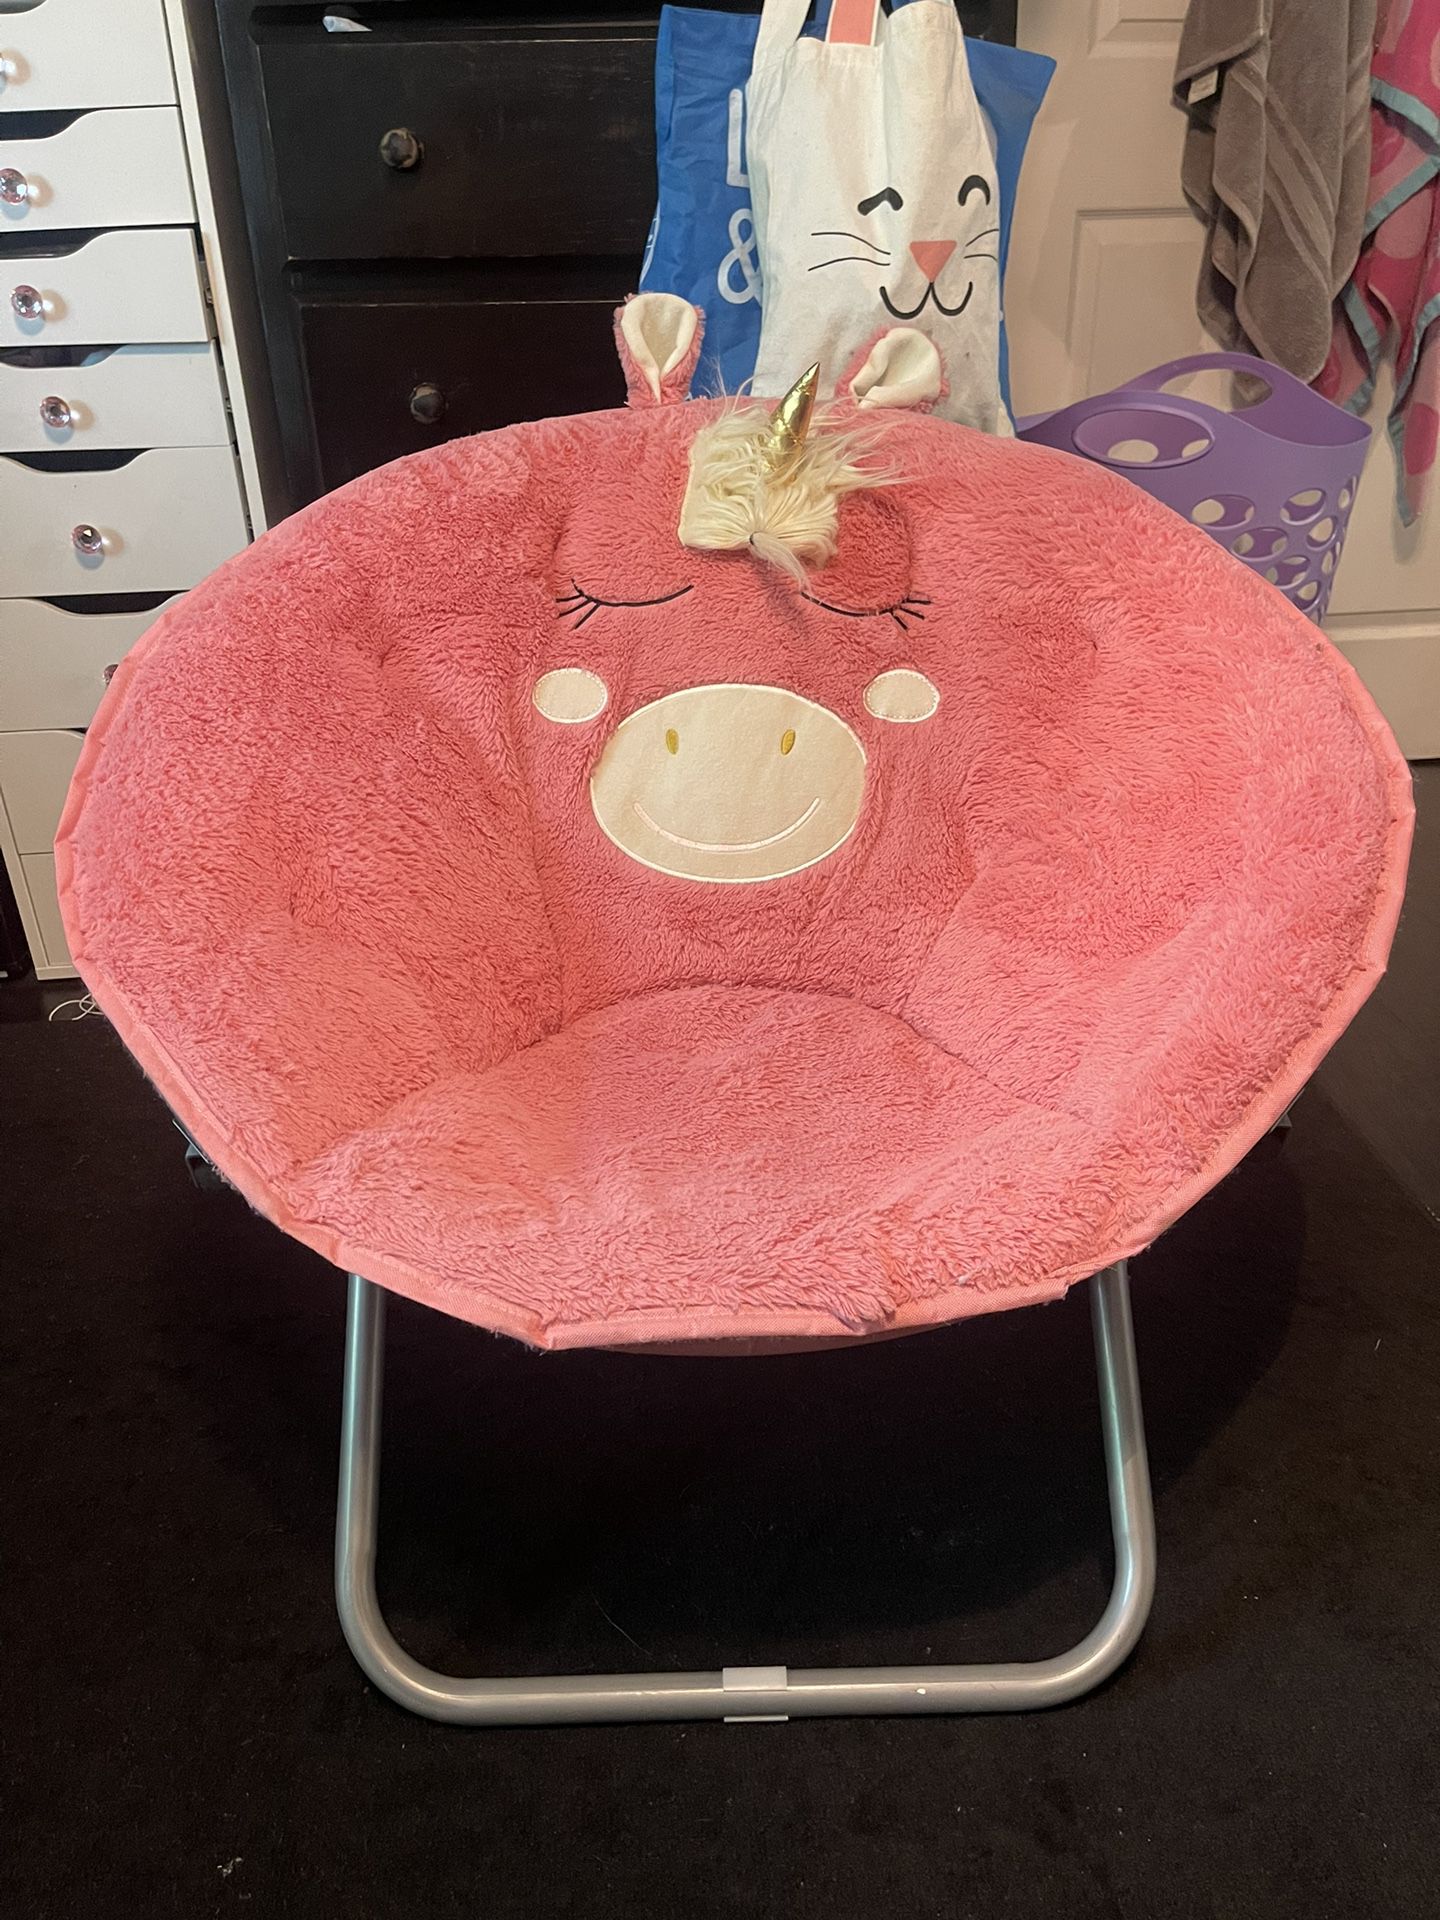 Pink unicorn folding chair for kids $40